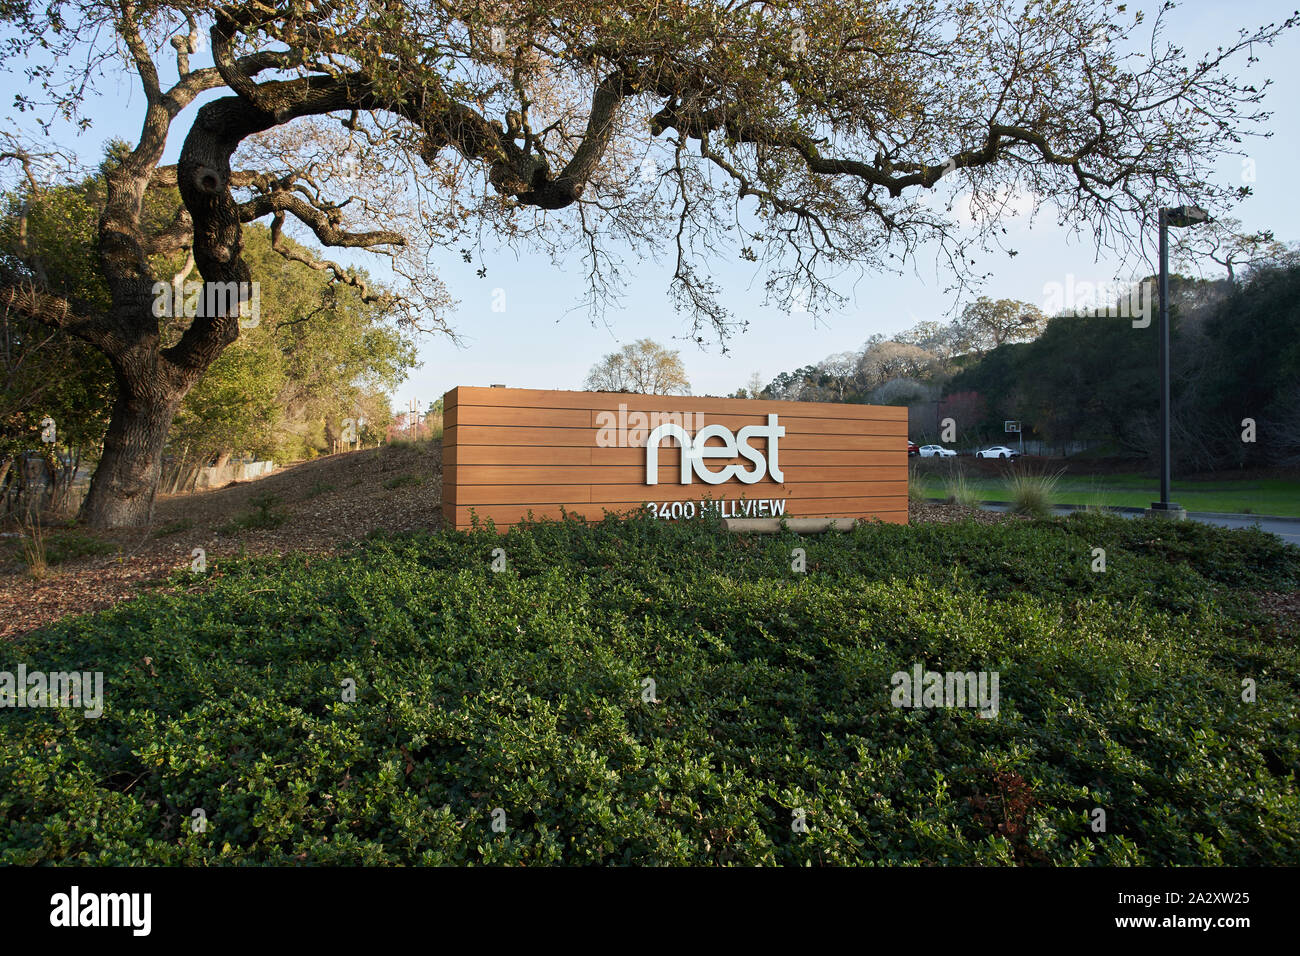 Palo Alto, California - Dec 10, 2018: The entrance sign at Nest Labs Headquarters. Stock Photo